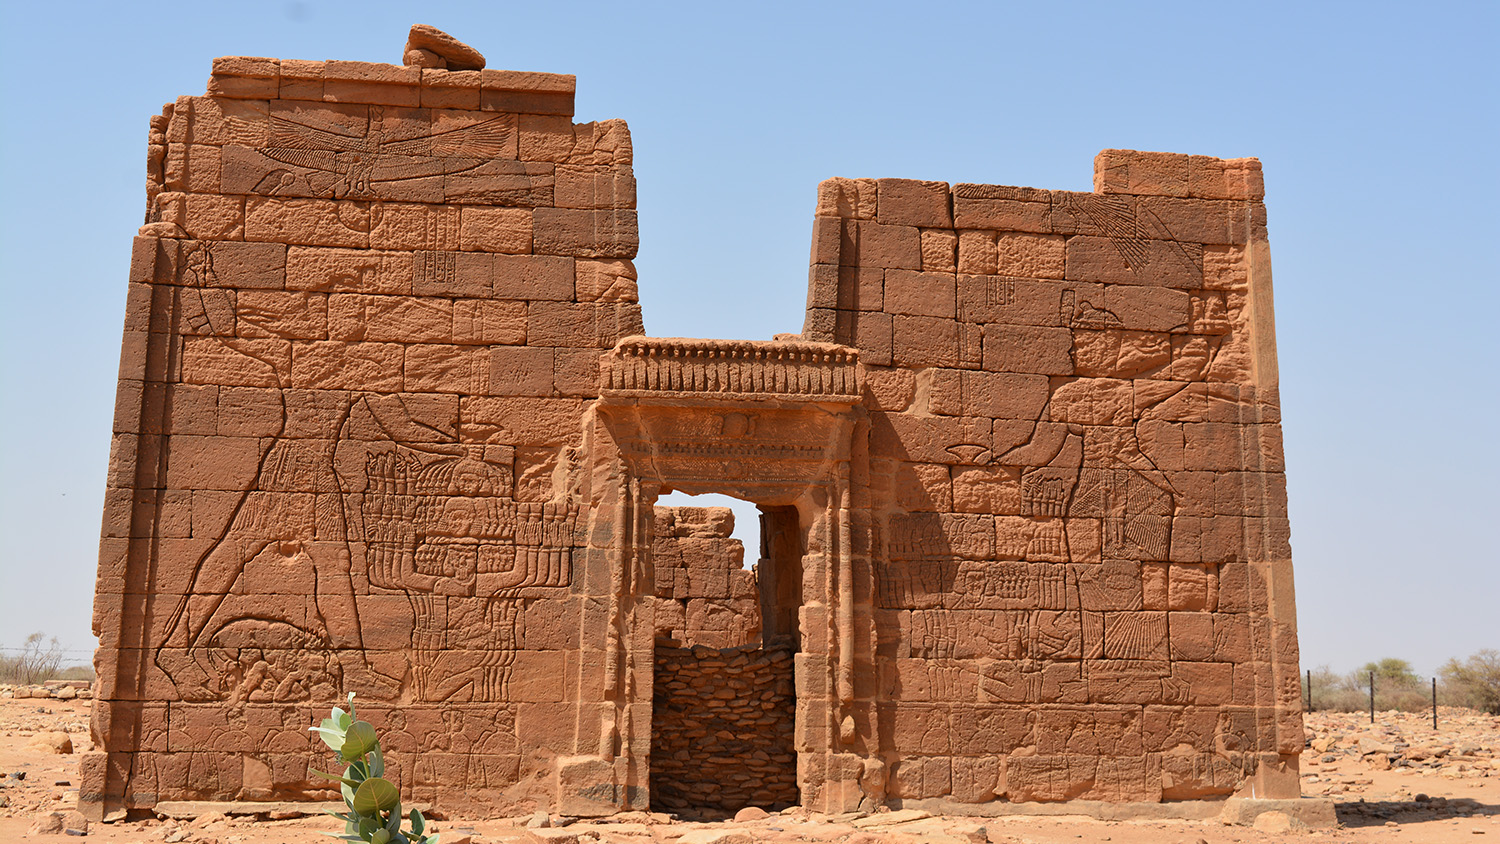 Pylon of the Nubian Lion Temple at Naga, Sudan.